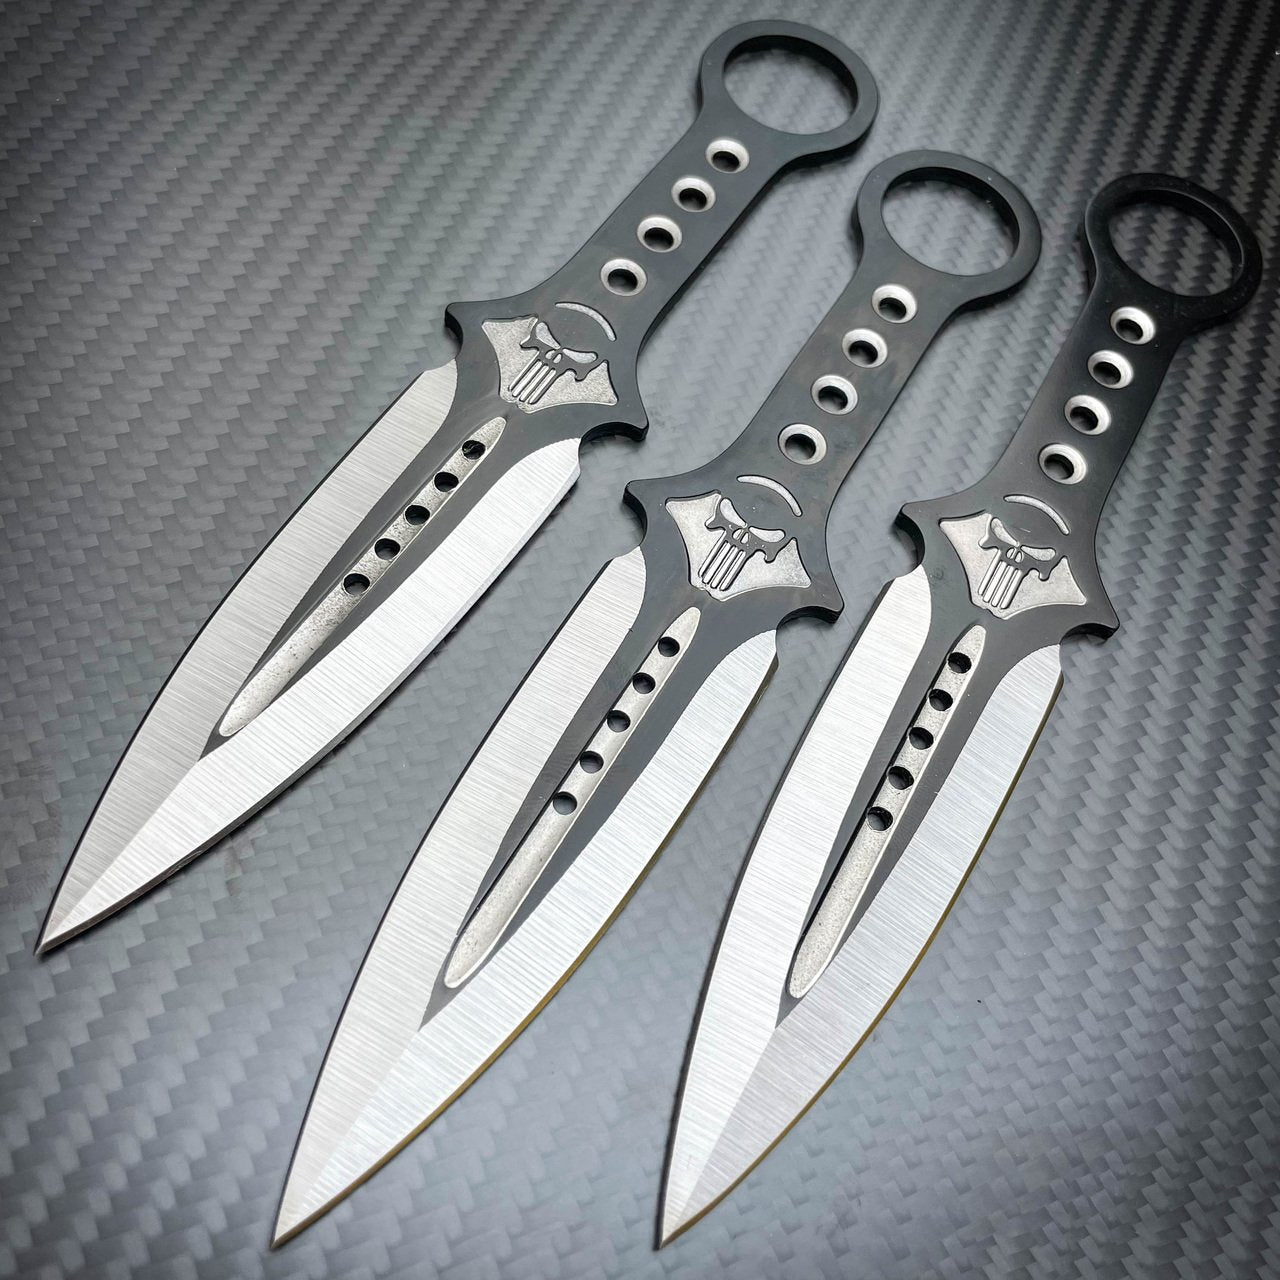 3 Pc 8 Ninja Tactical Combat Naruto Kunai Throwing Knife Set w/ Sheath  Hunting - MEGAKNIFE